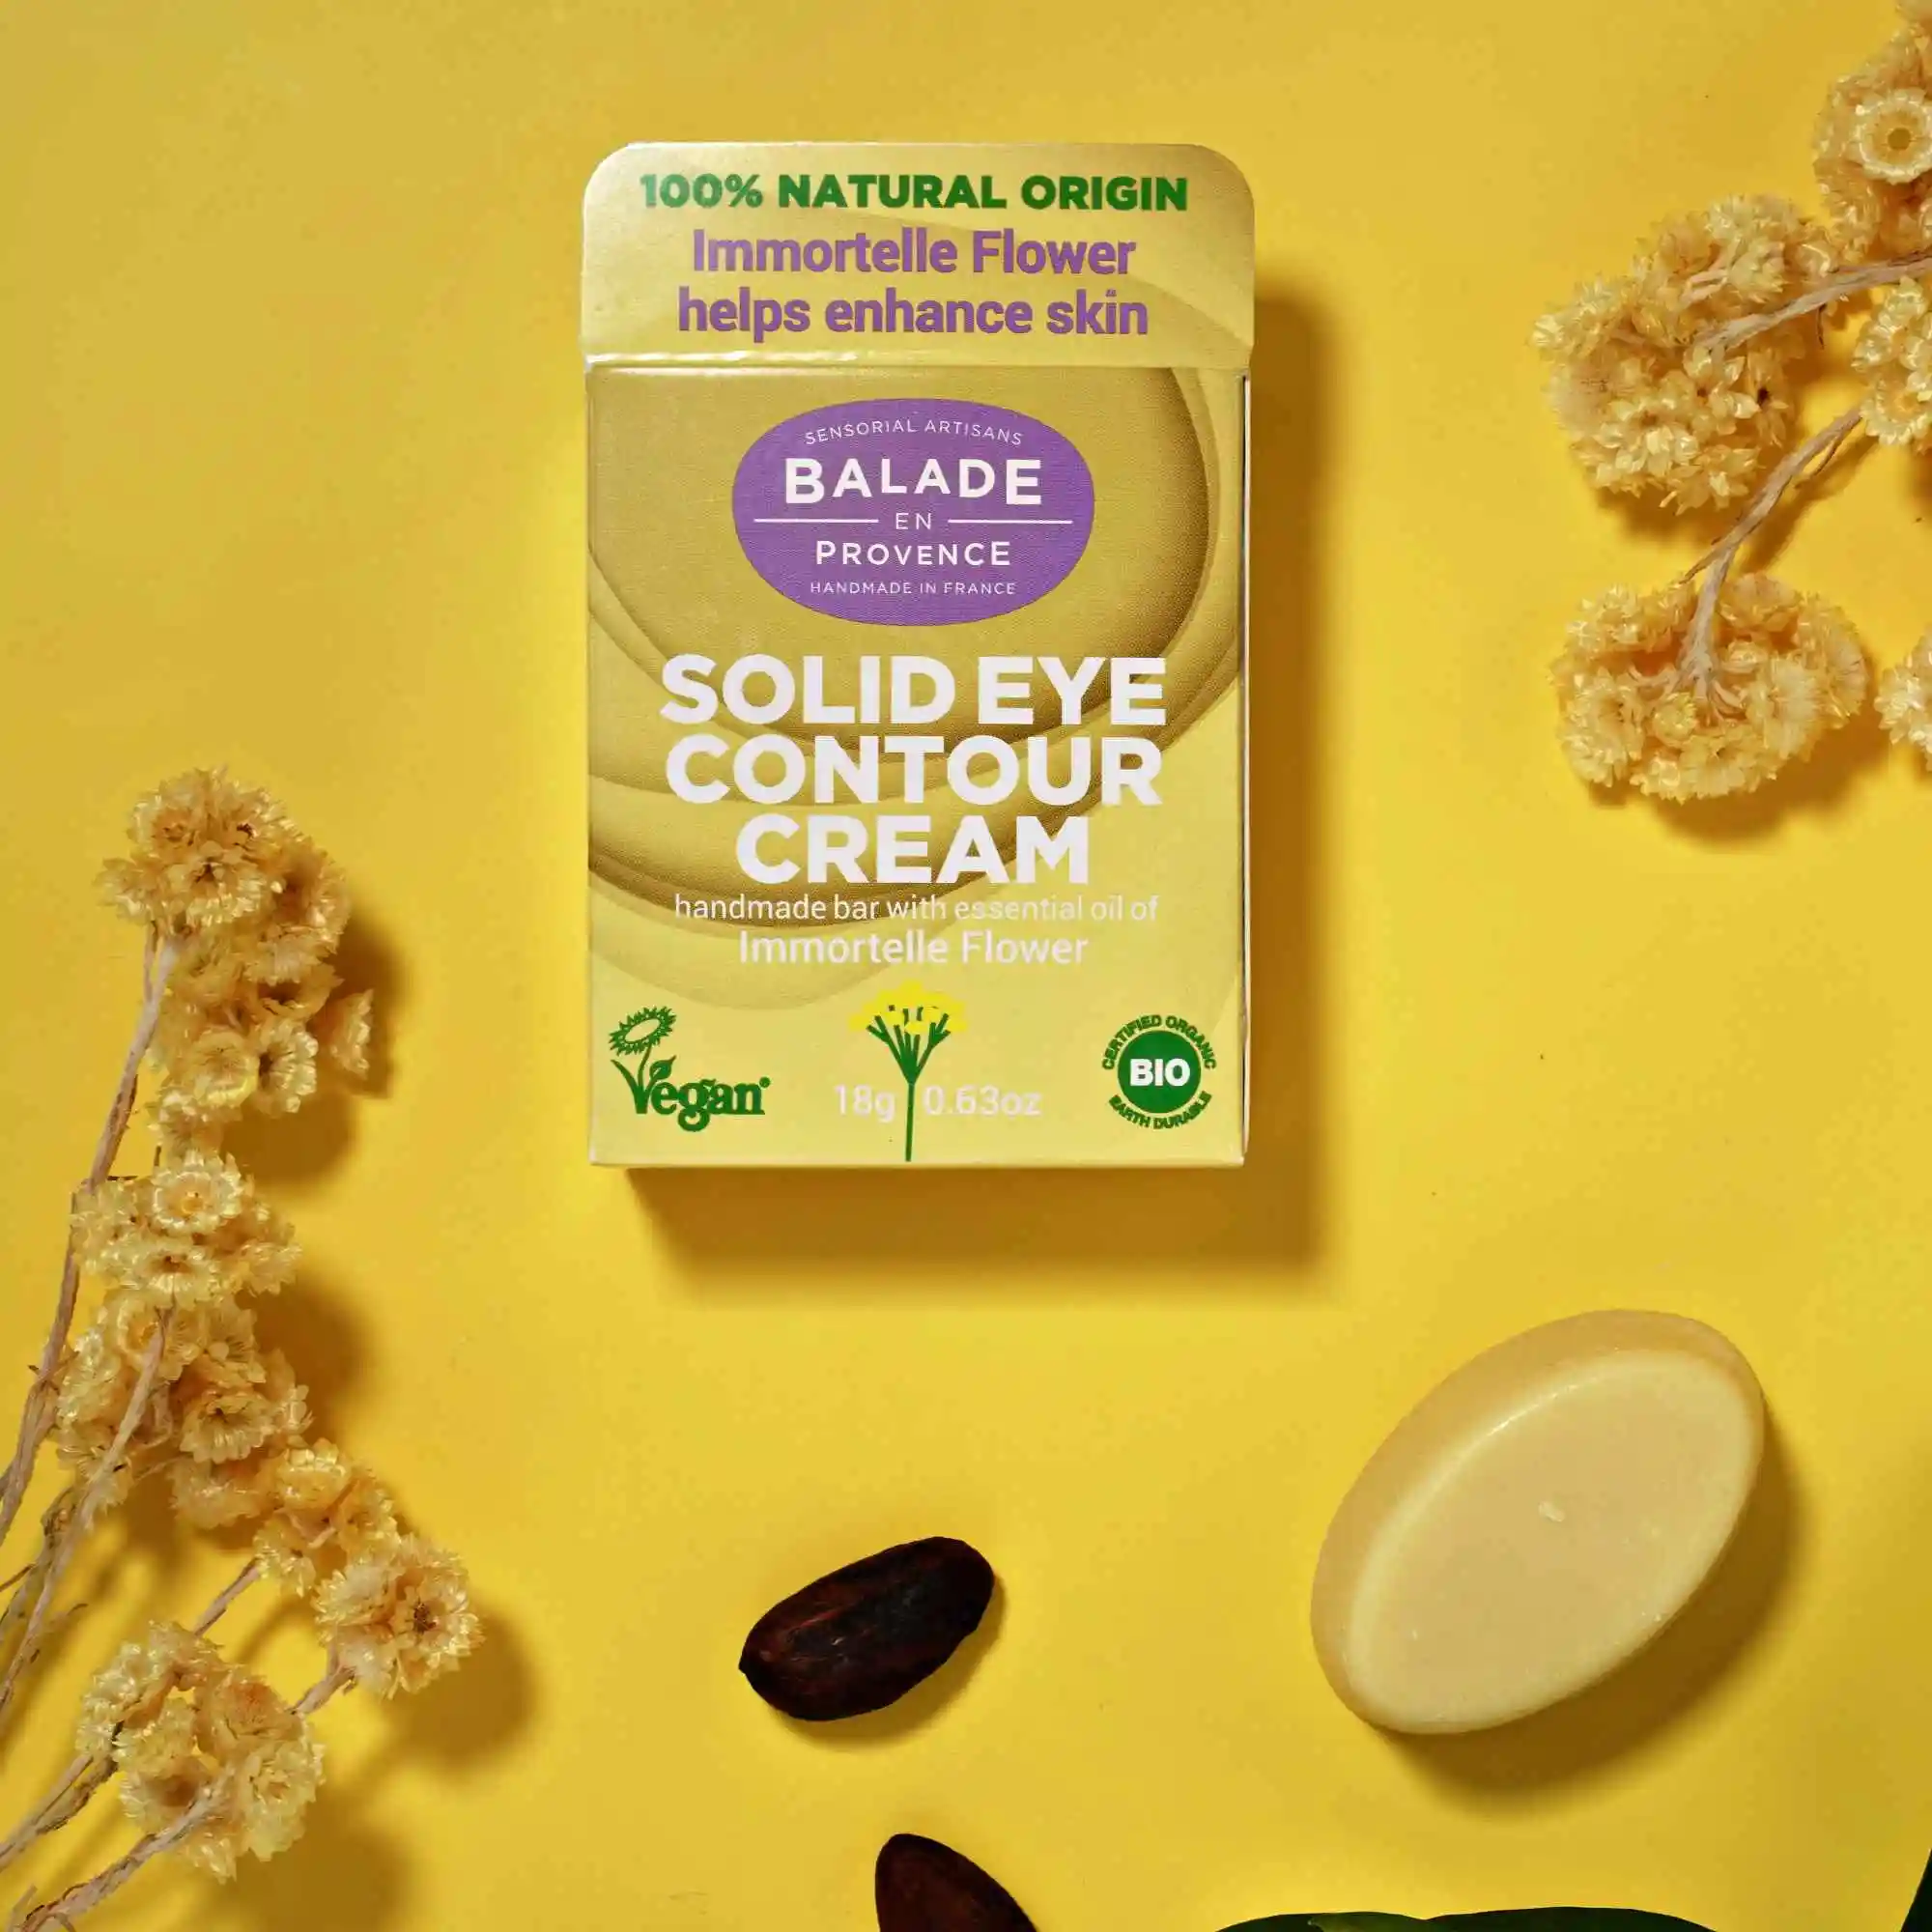 Balade En Provence 100% Natural Origin Vegan France Handmade Wrinkle Care Nourishing Solid Eye Contour Cream 18g